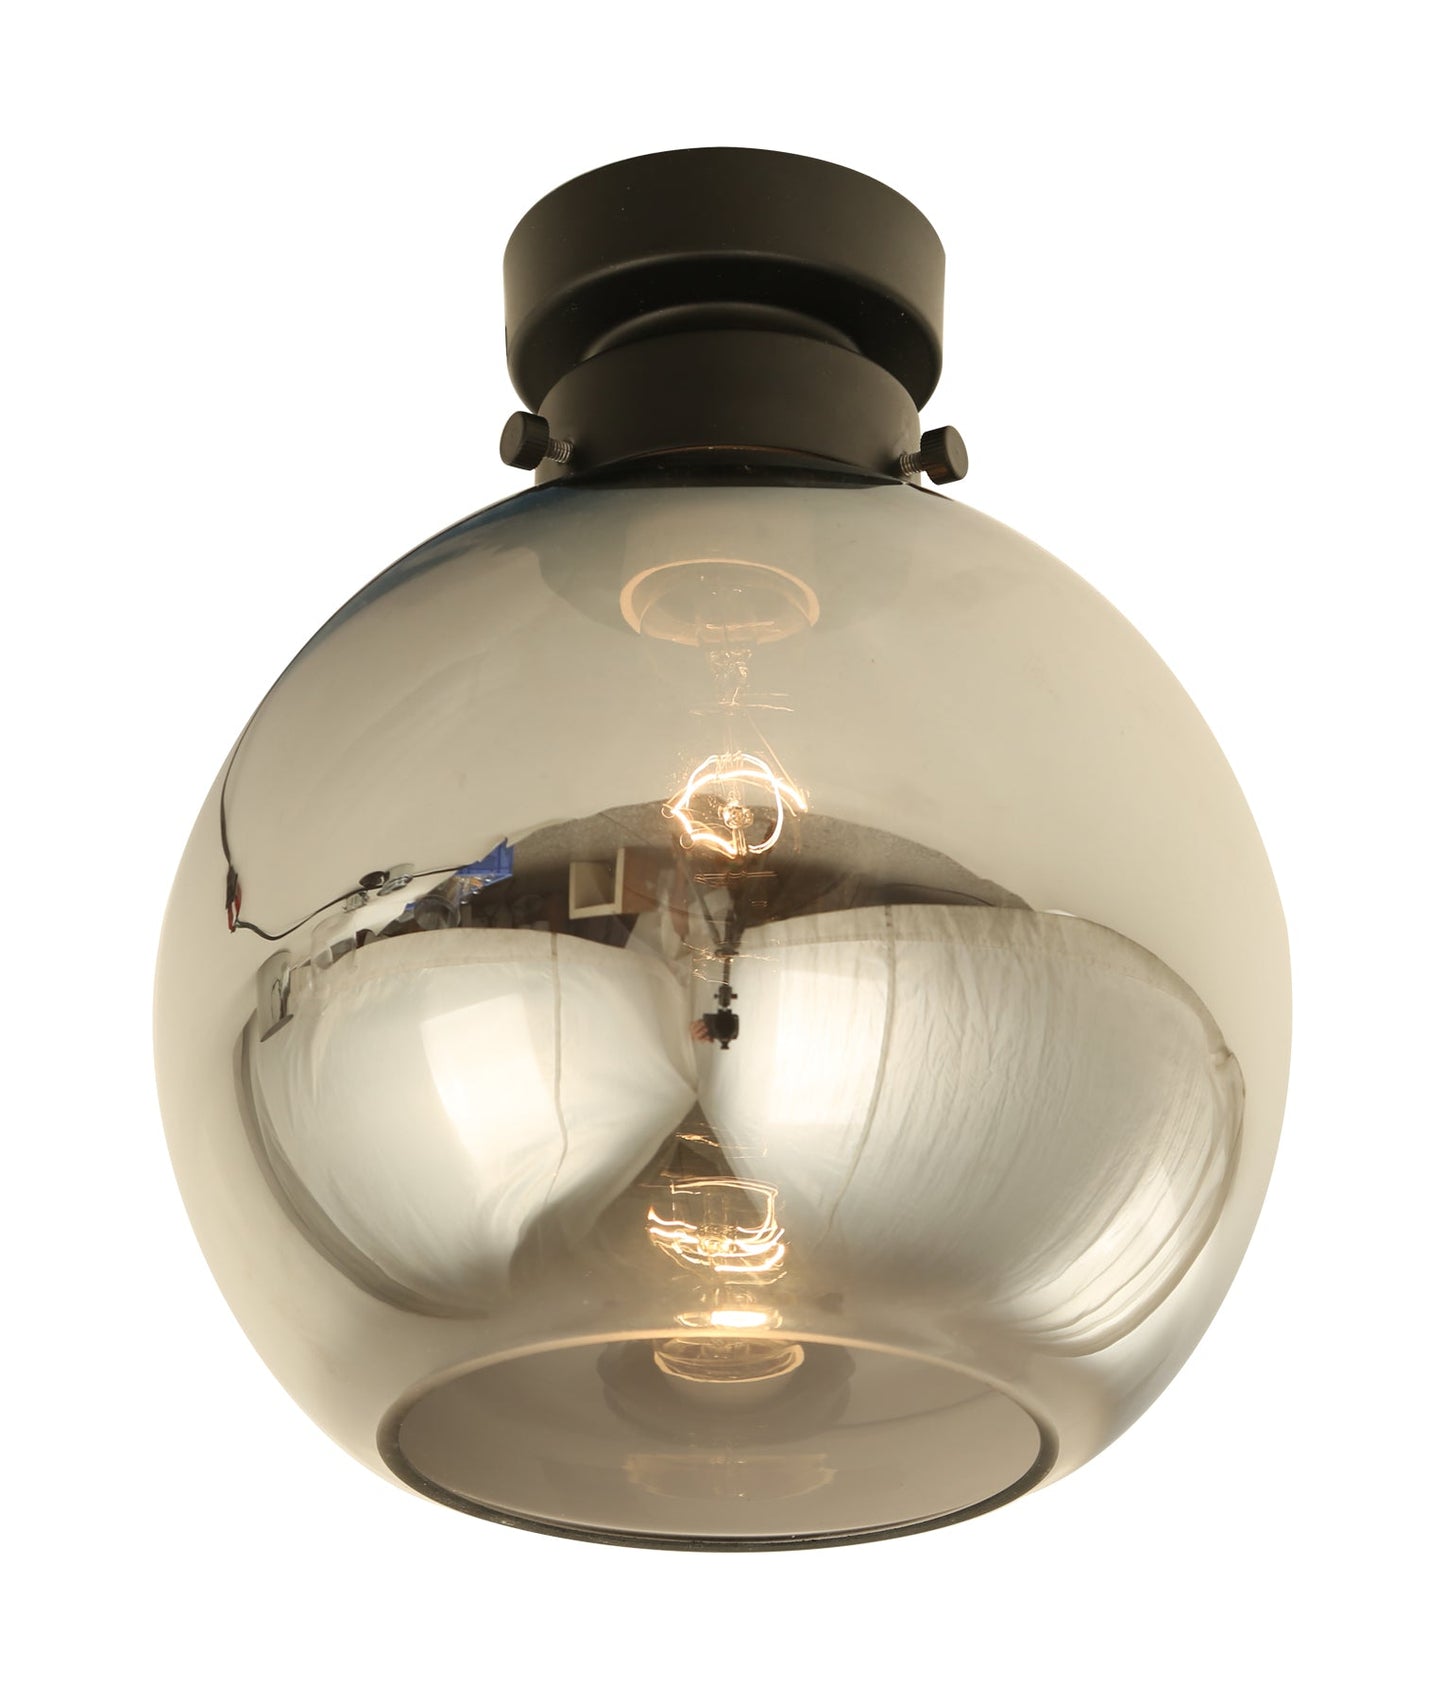 D.I.Y. Batten Fix Ceiling Lights - Wine Glass Shape Fixtures